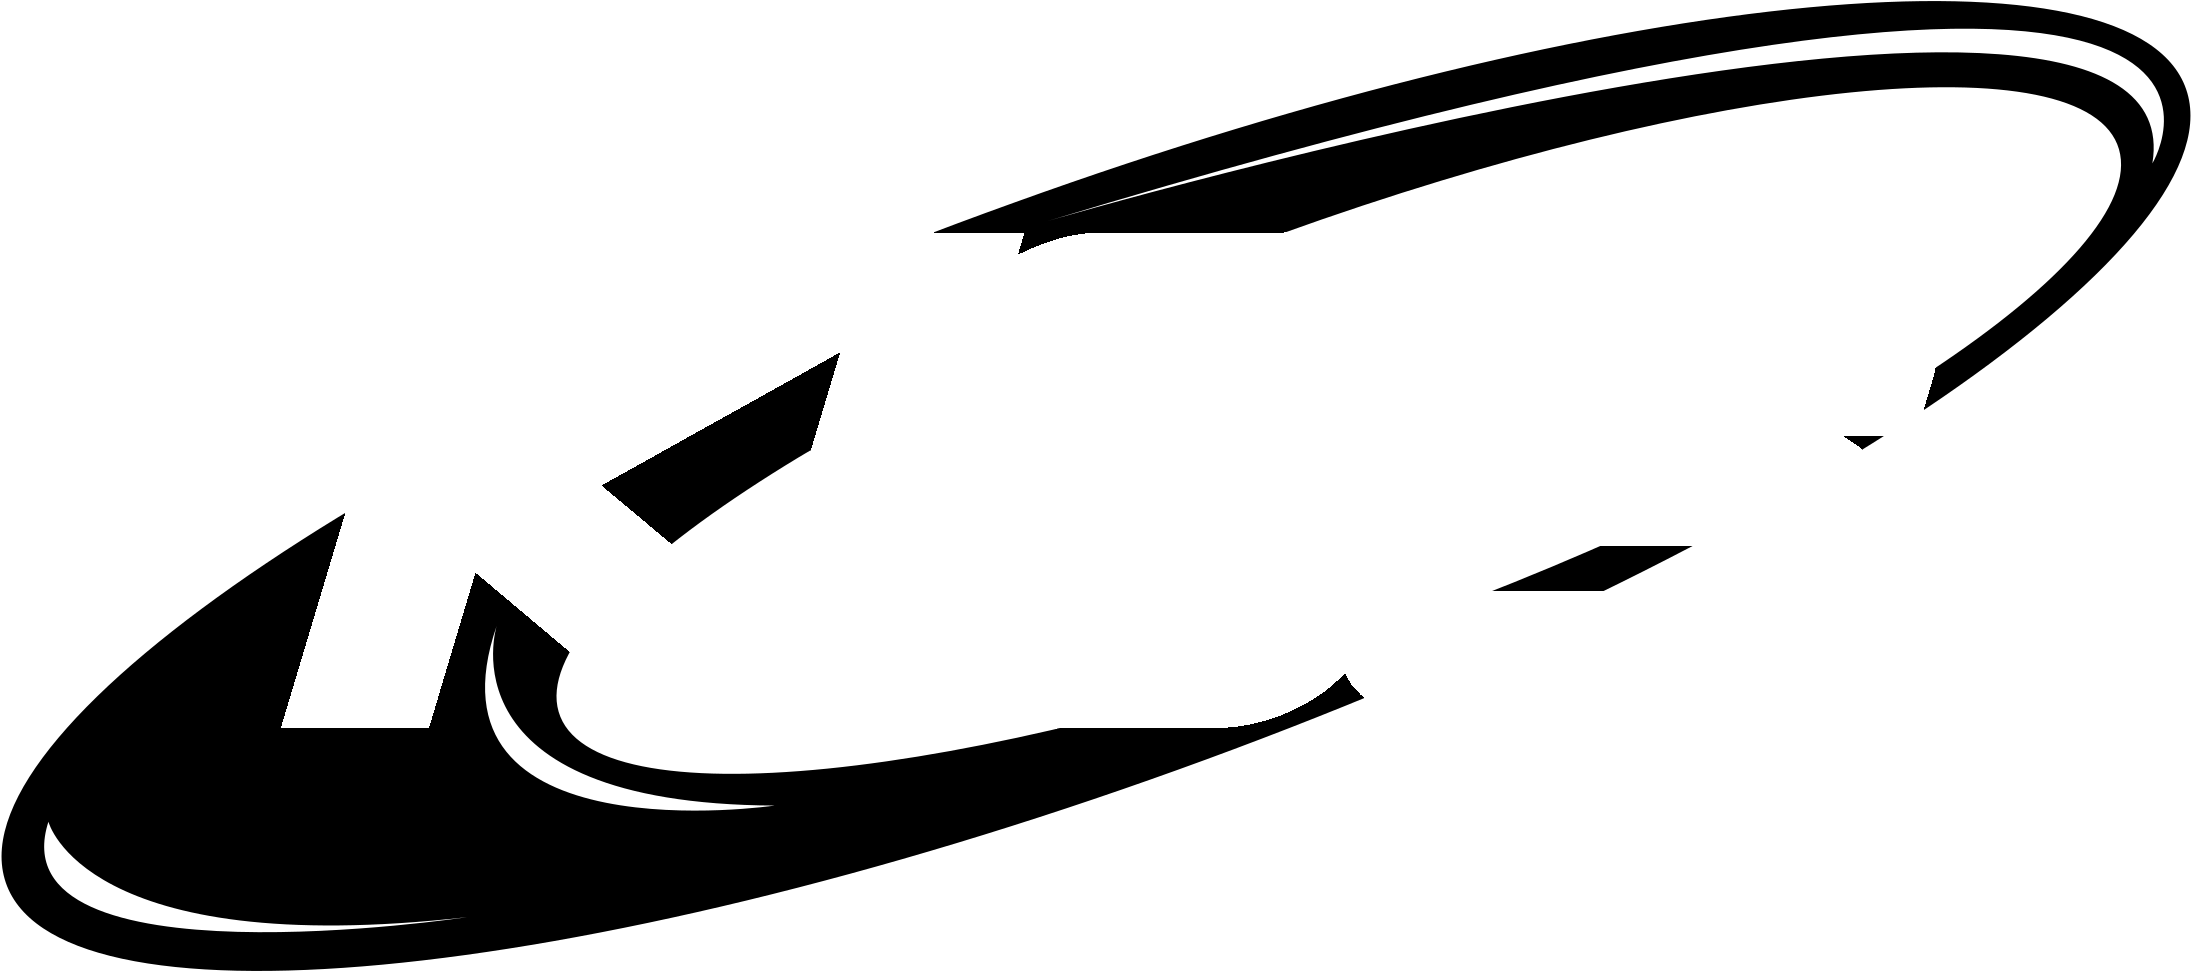 Kiss Logo Black And White - Flip-flops (2400x2400)